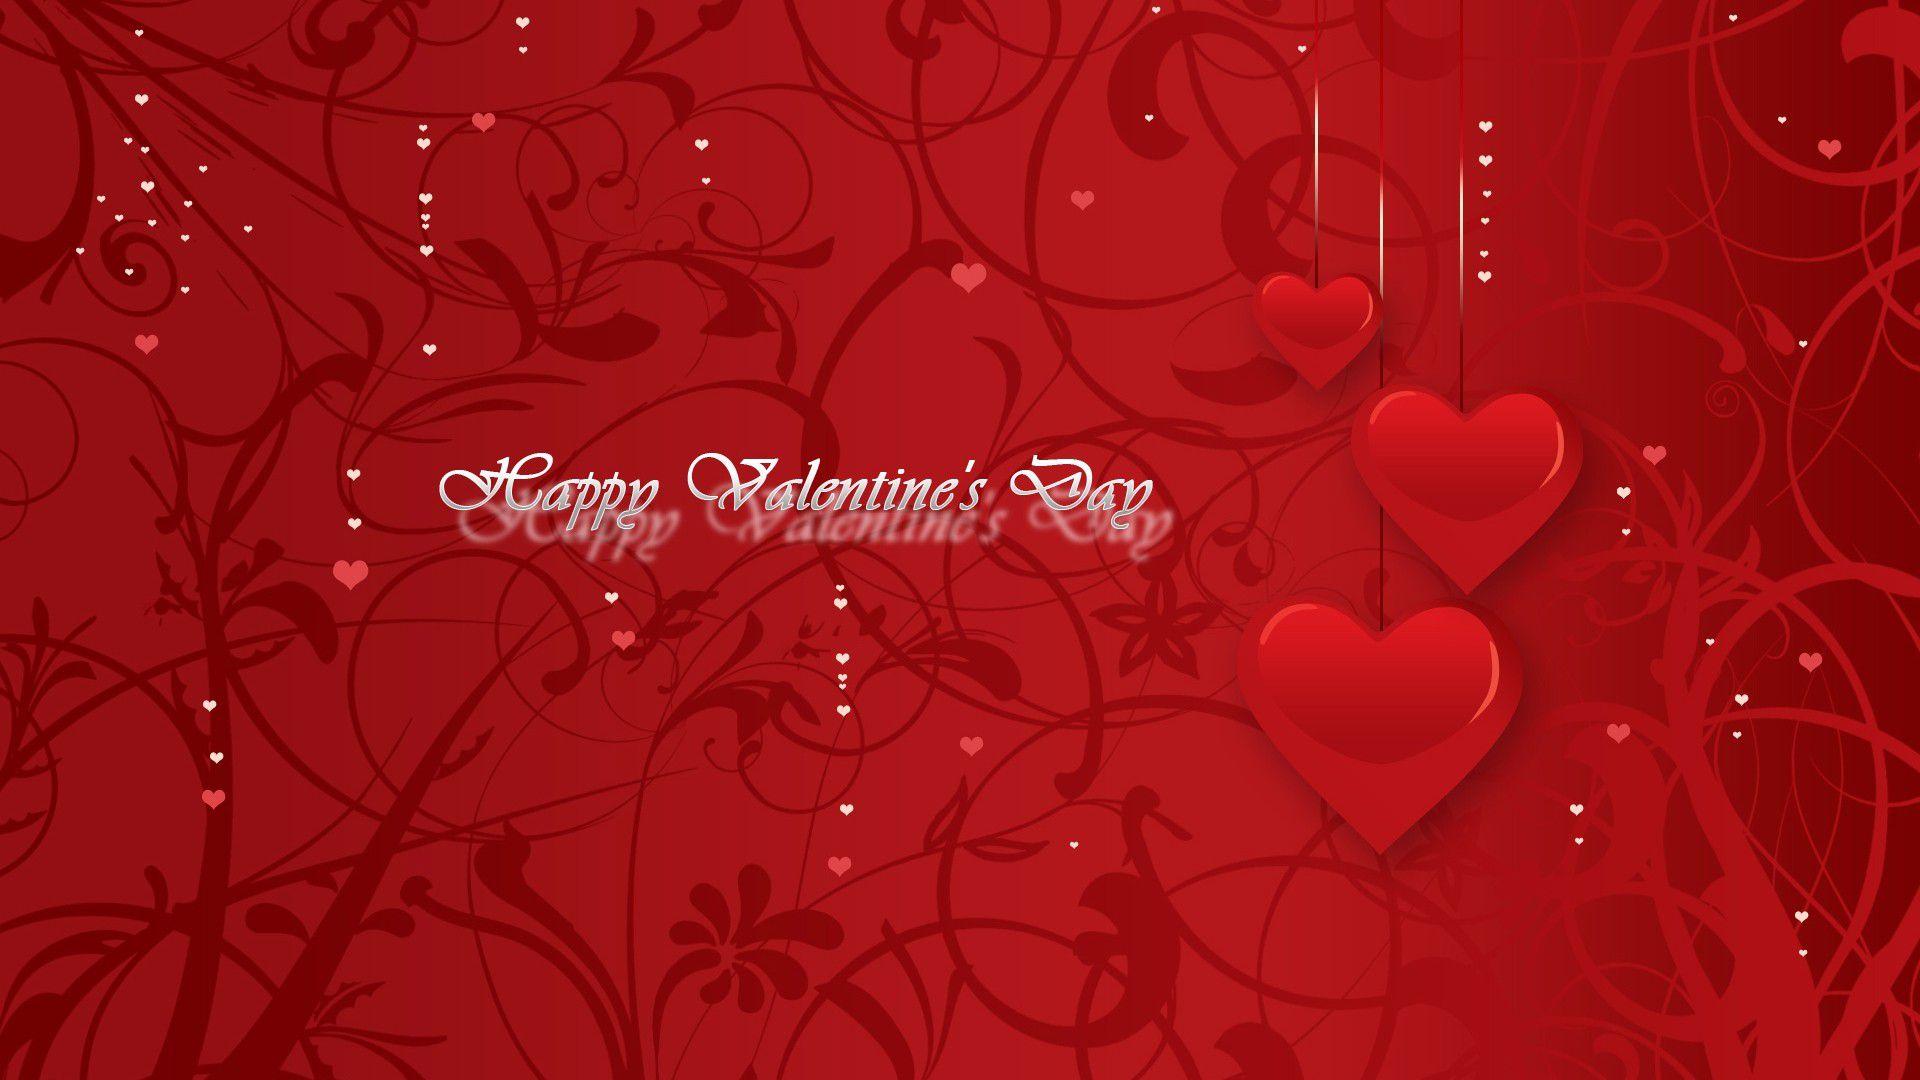 Happy Valentines Day Image, Pics, Photo & Wallpaper 2020 HD